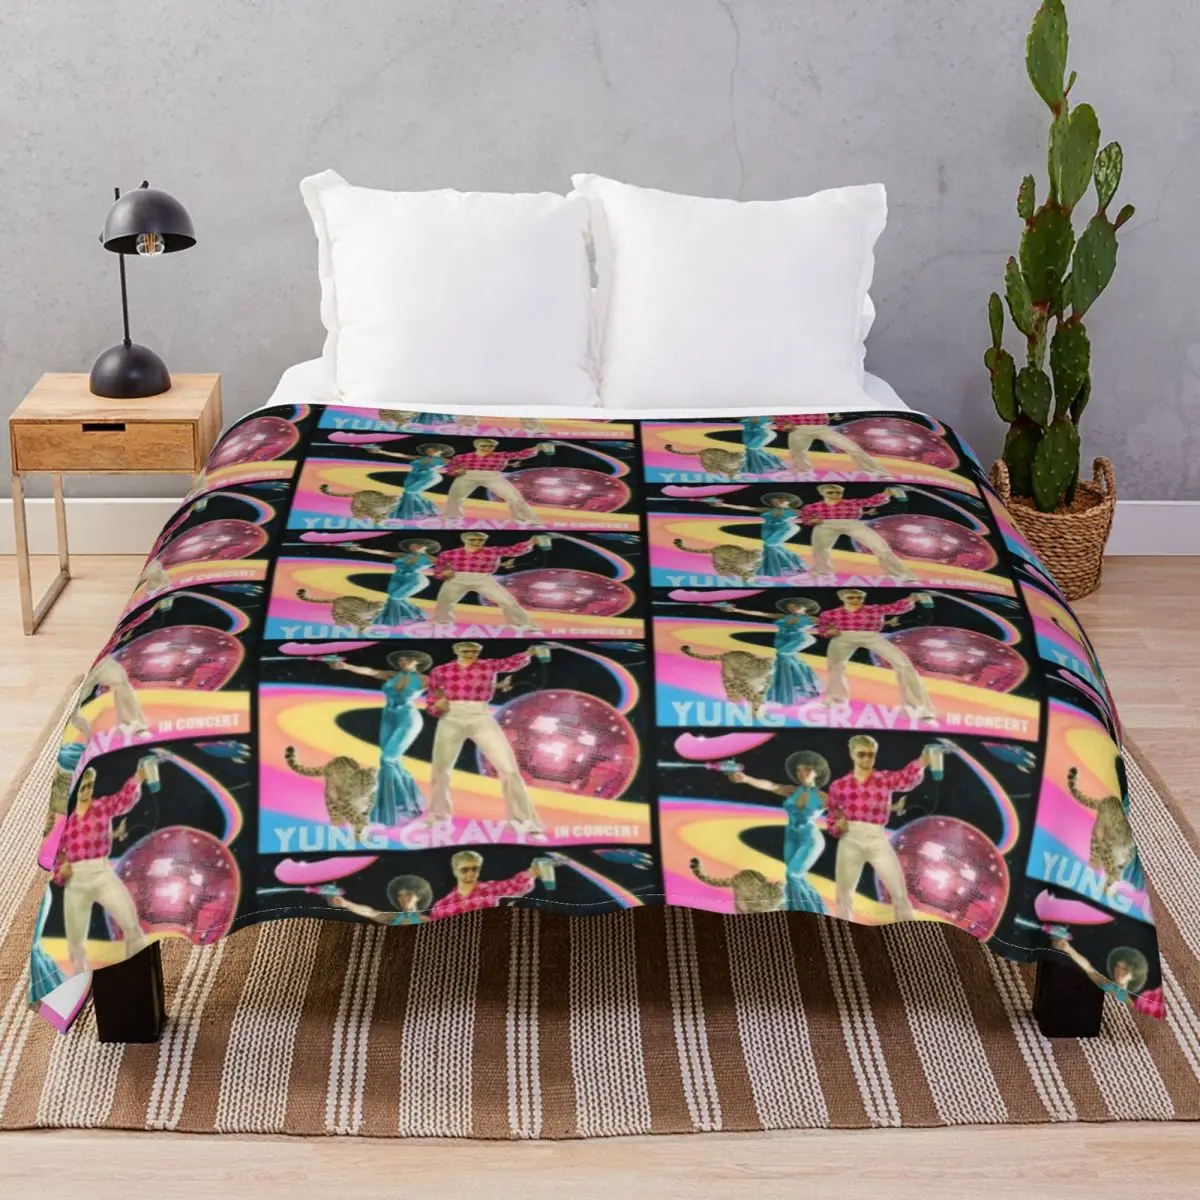 YUNG GRAVY TOUR Blankets Flannel Decoration Super Warm Throw Blanket for Bedding Sofa Travel Cinema